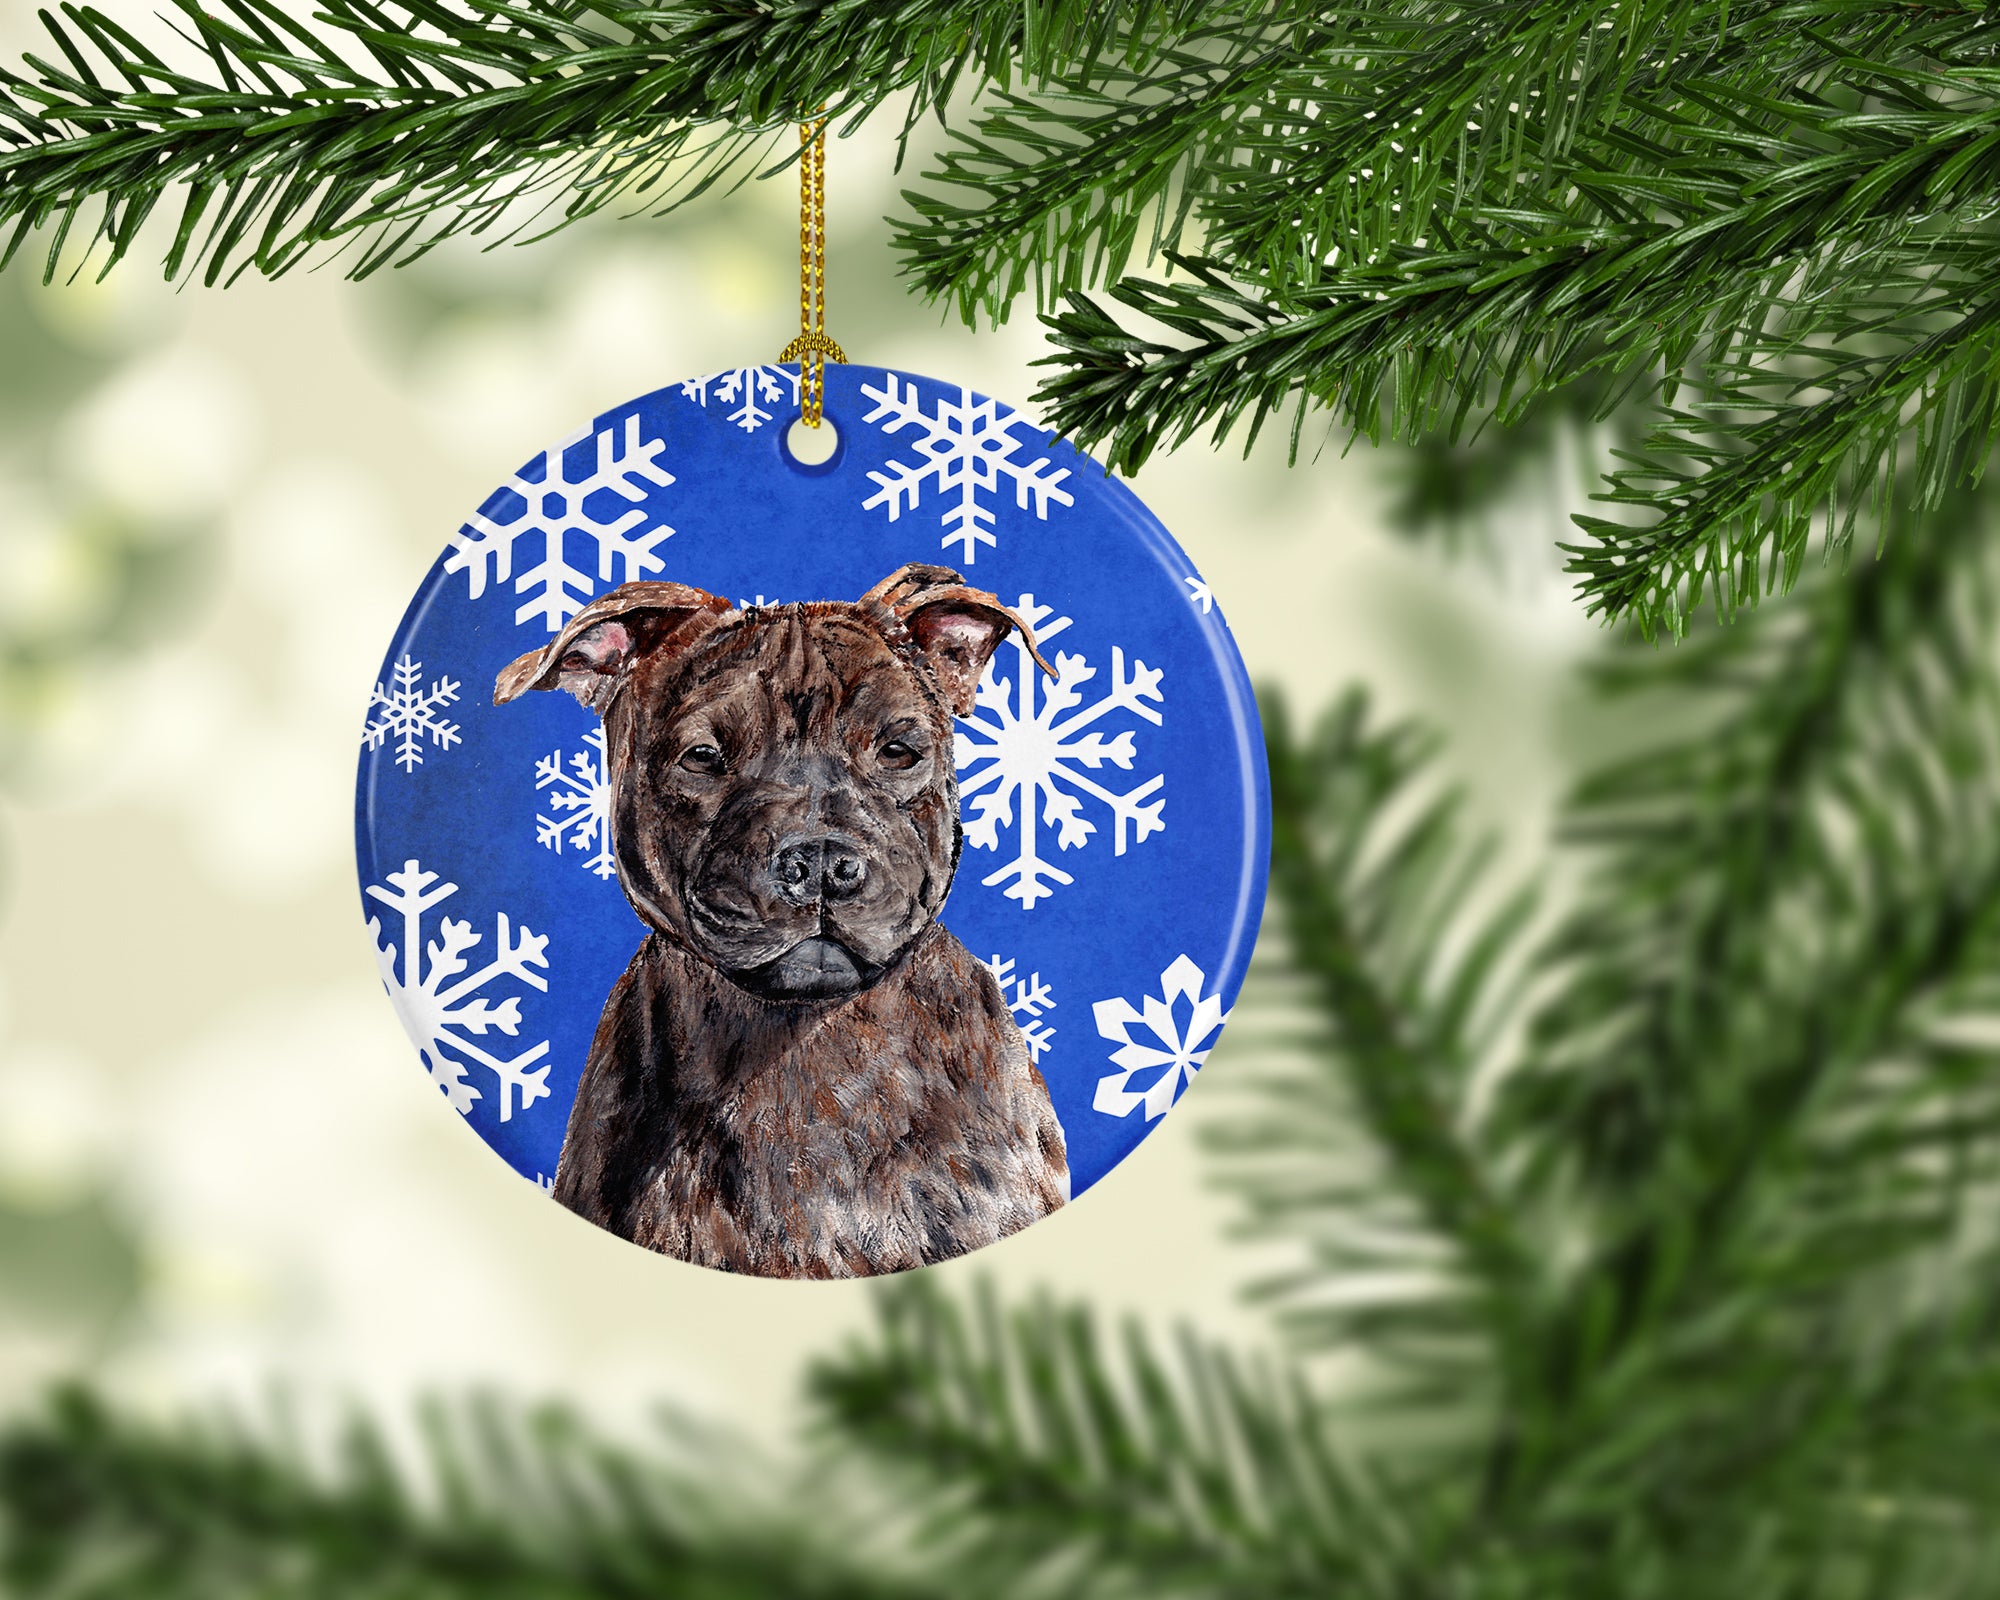 Staffordshire Bull Terrier Staffie Winter Snowflakes Ceramic Ornament SC9777CO1 - the-store.com